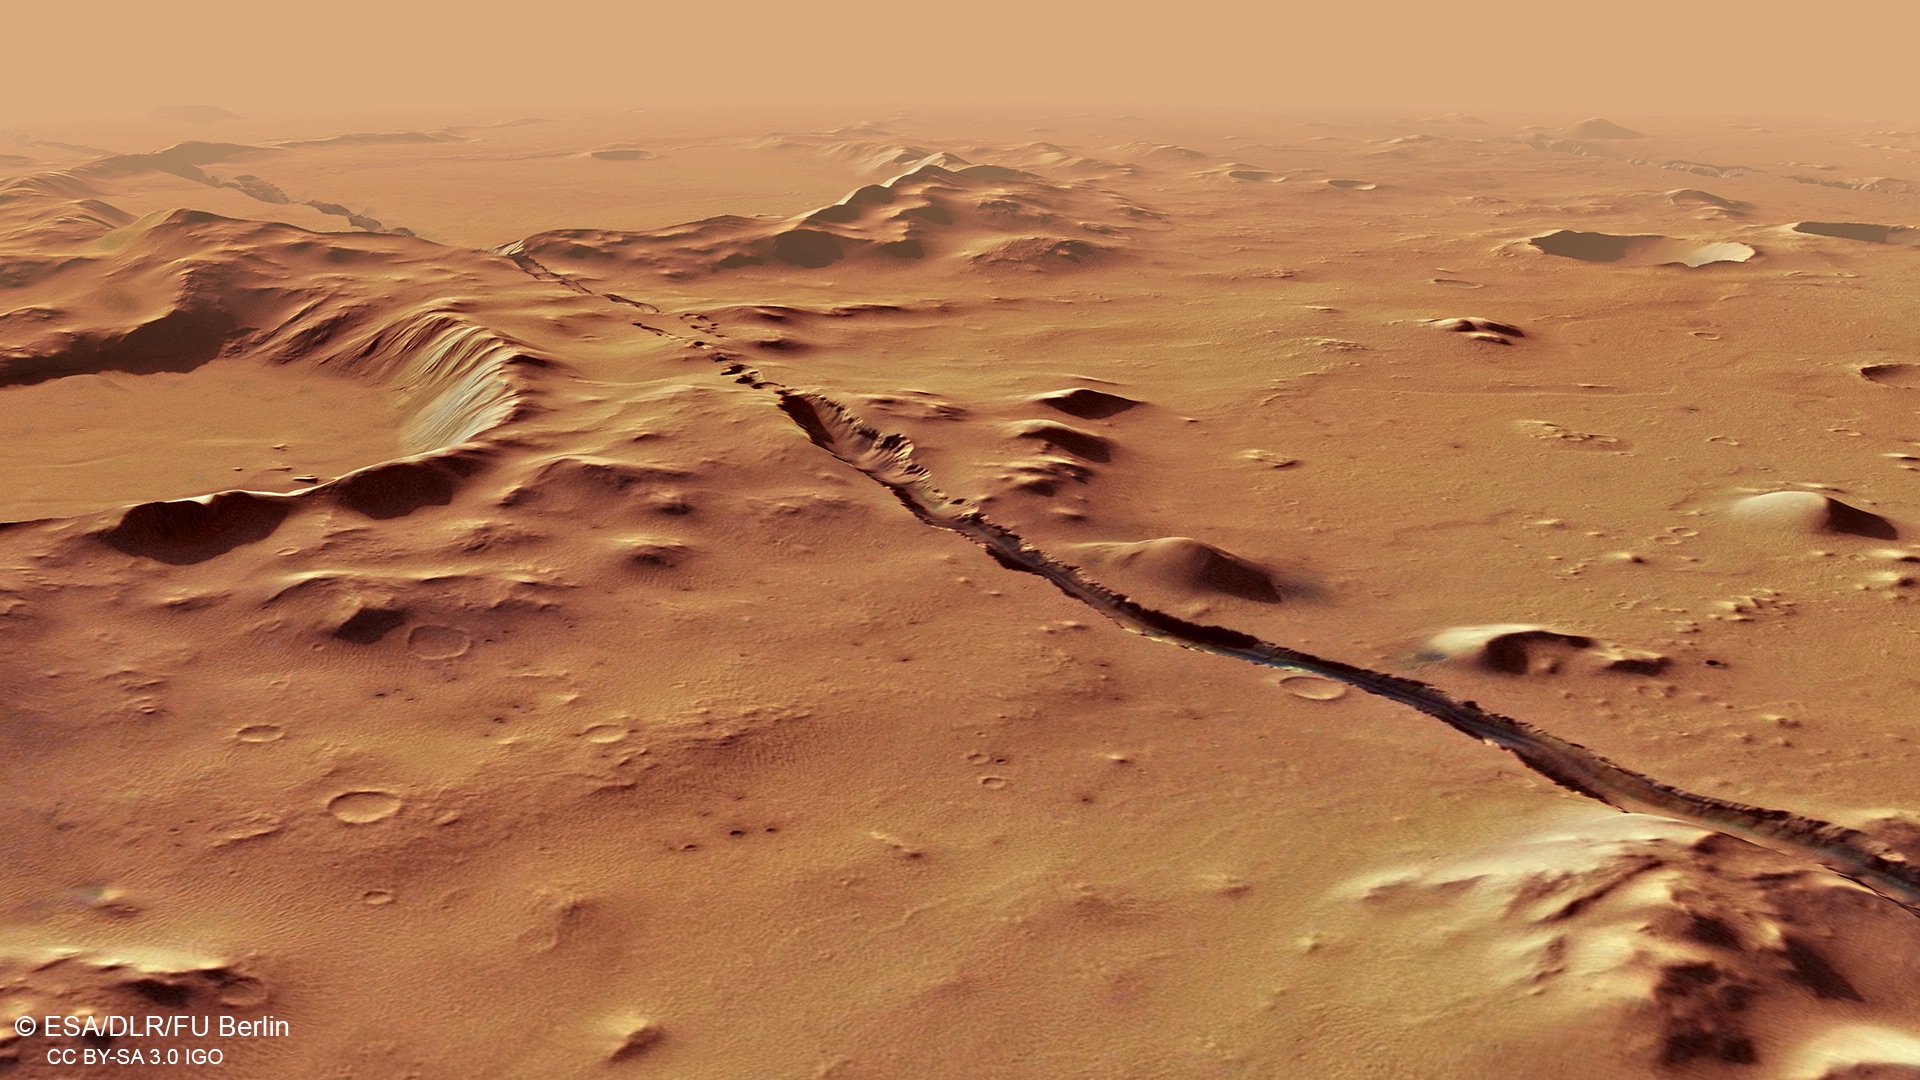 Magмa on Mars мay Ƅe ƄuƄƄling underground right now | Space